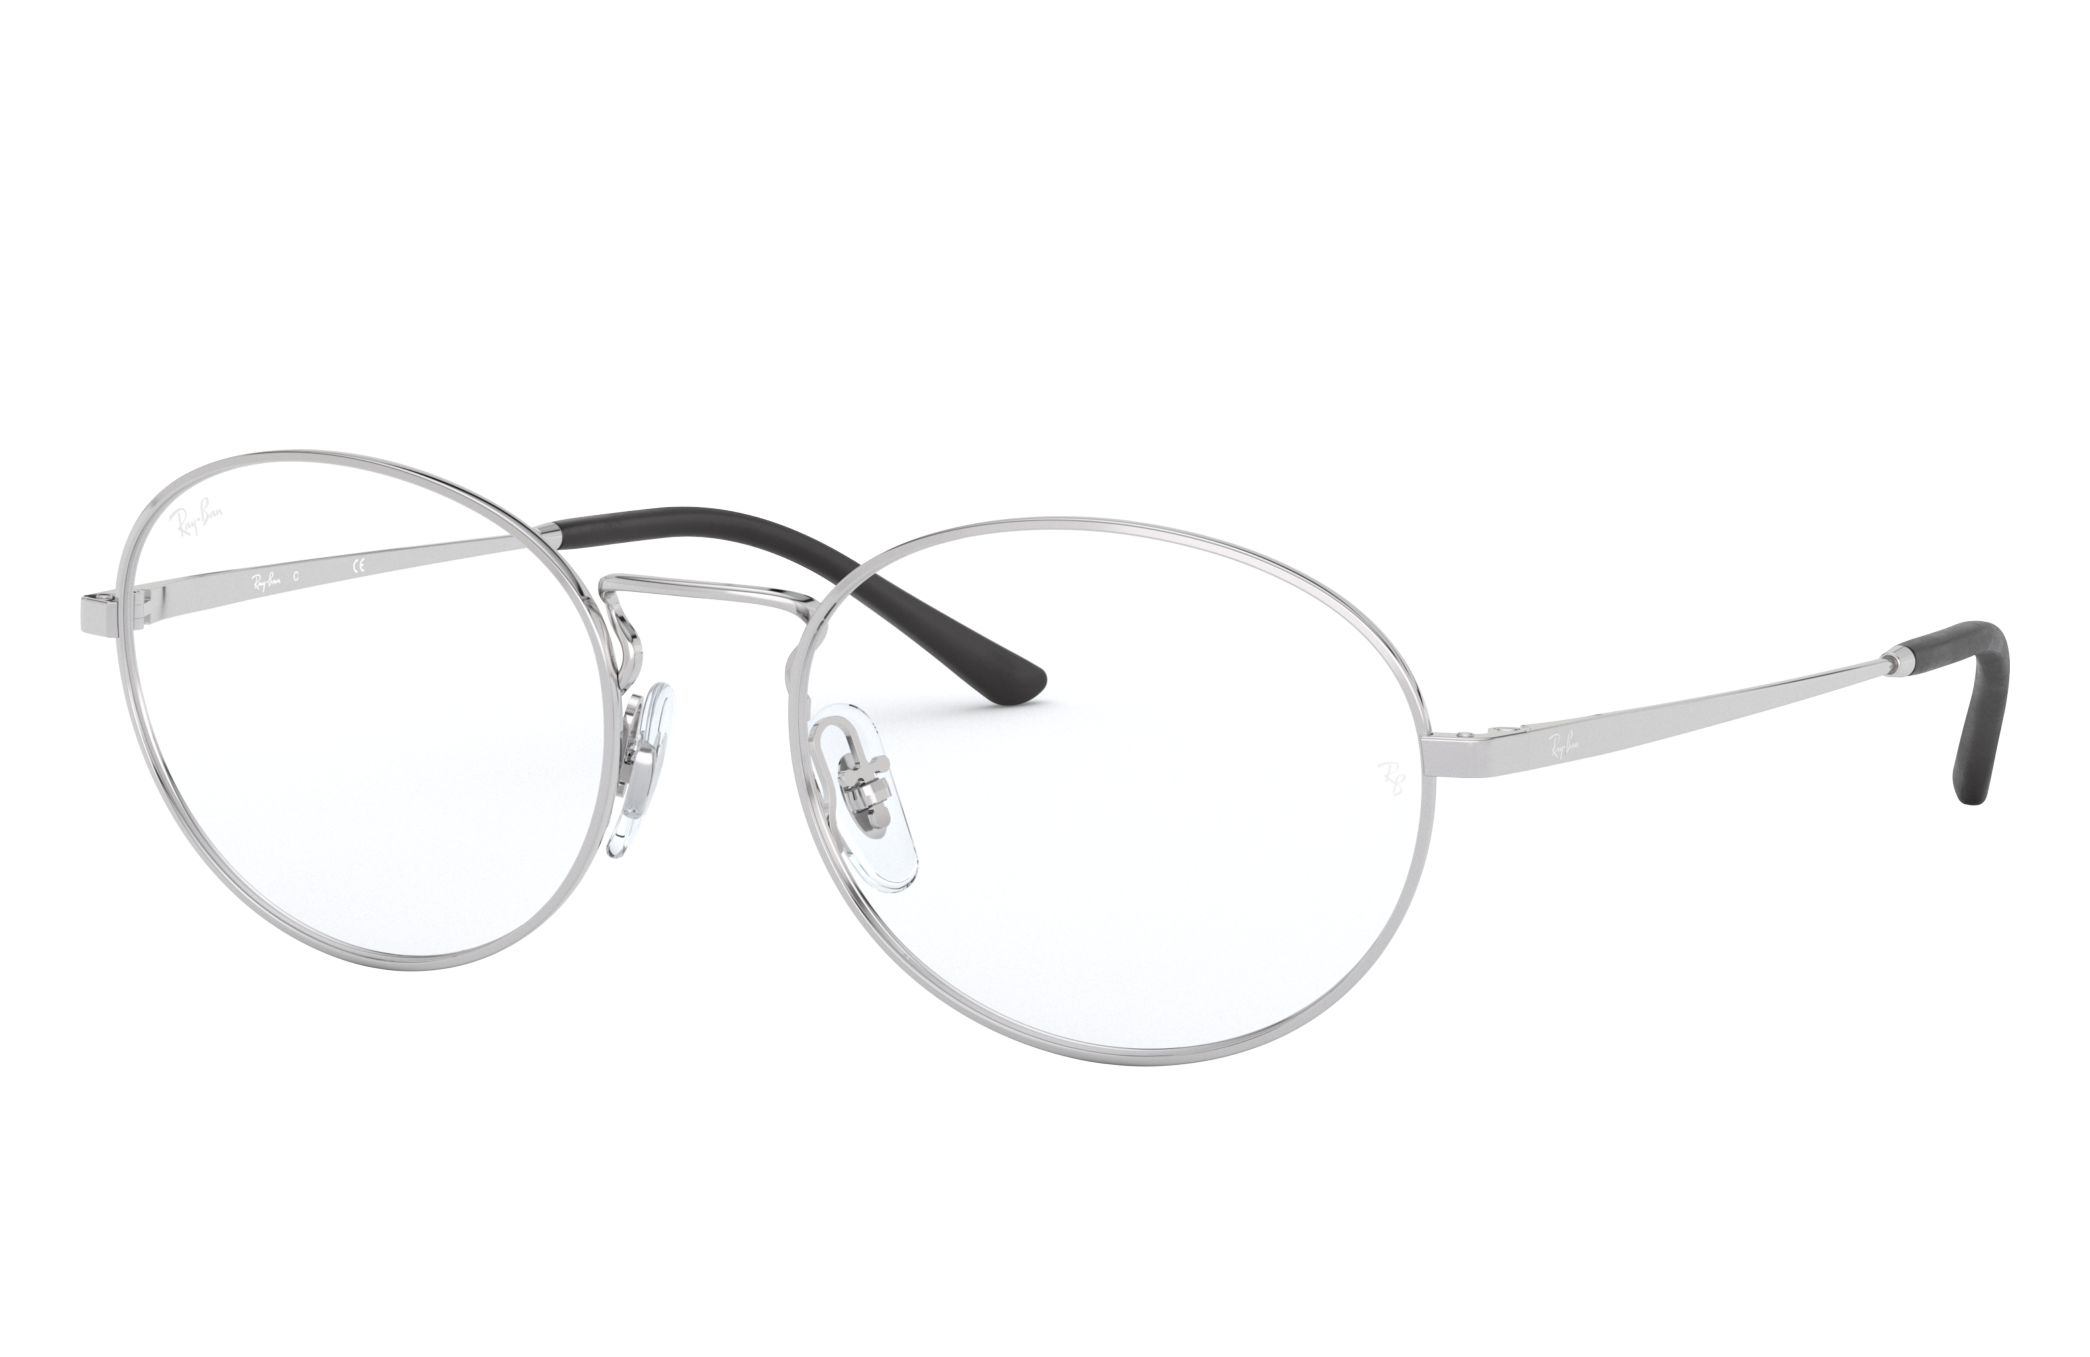 Rb6439 Optics Eyeglasses with Silver Frame - RB6439 | Ray-Ban®